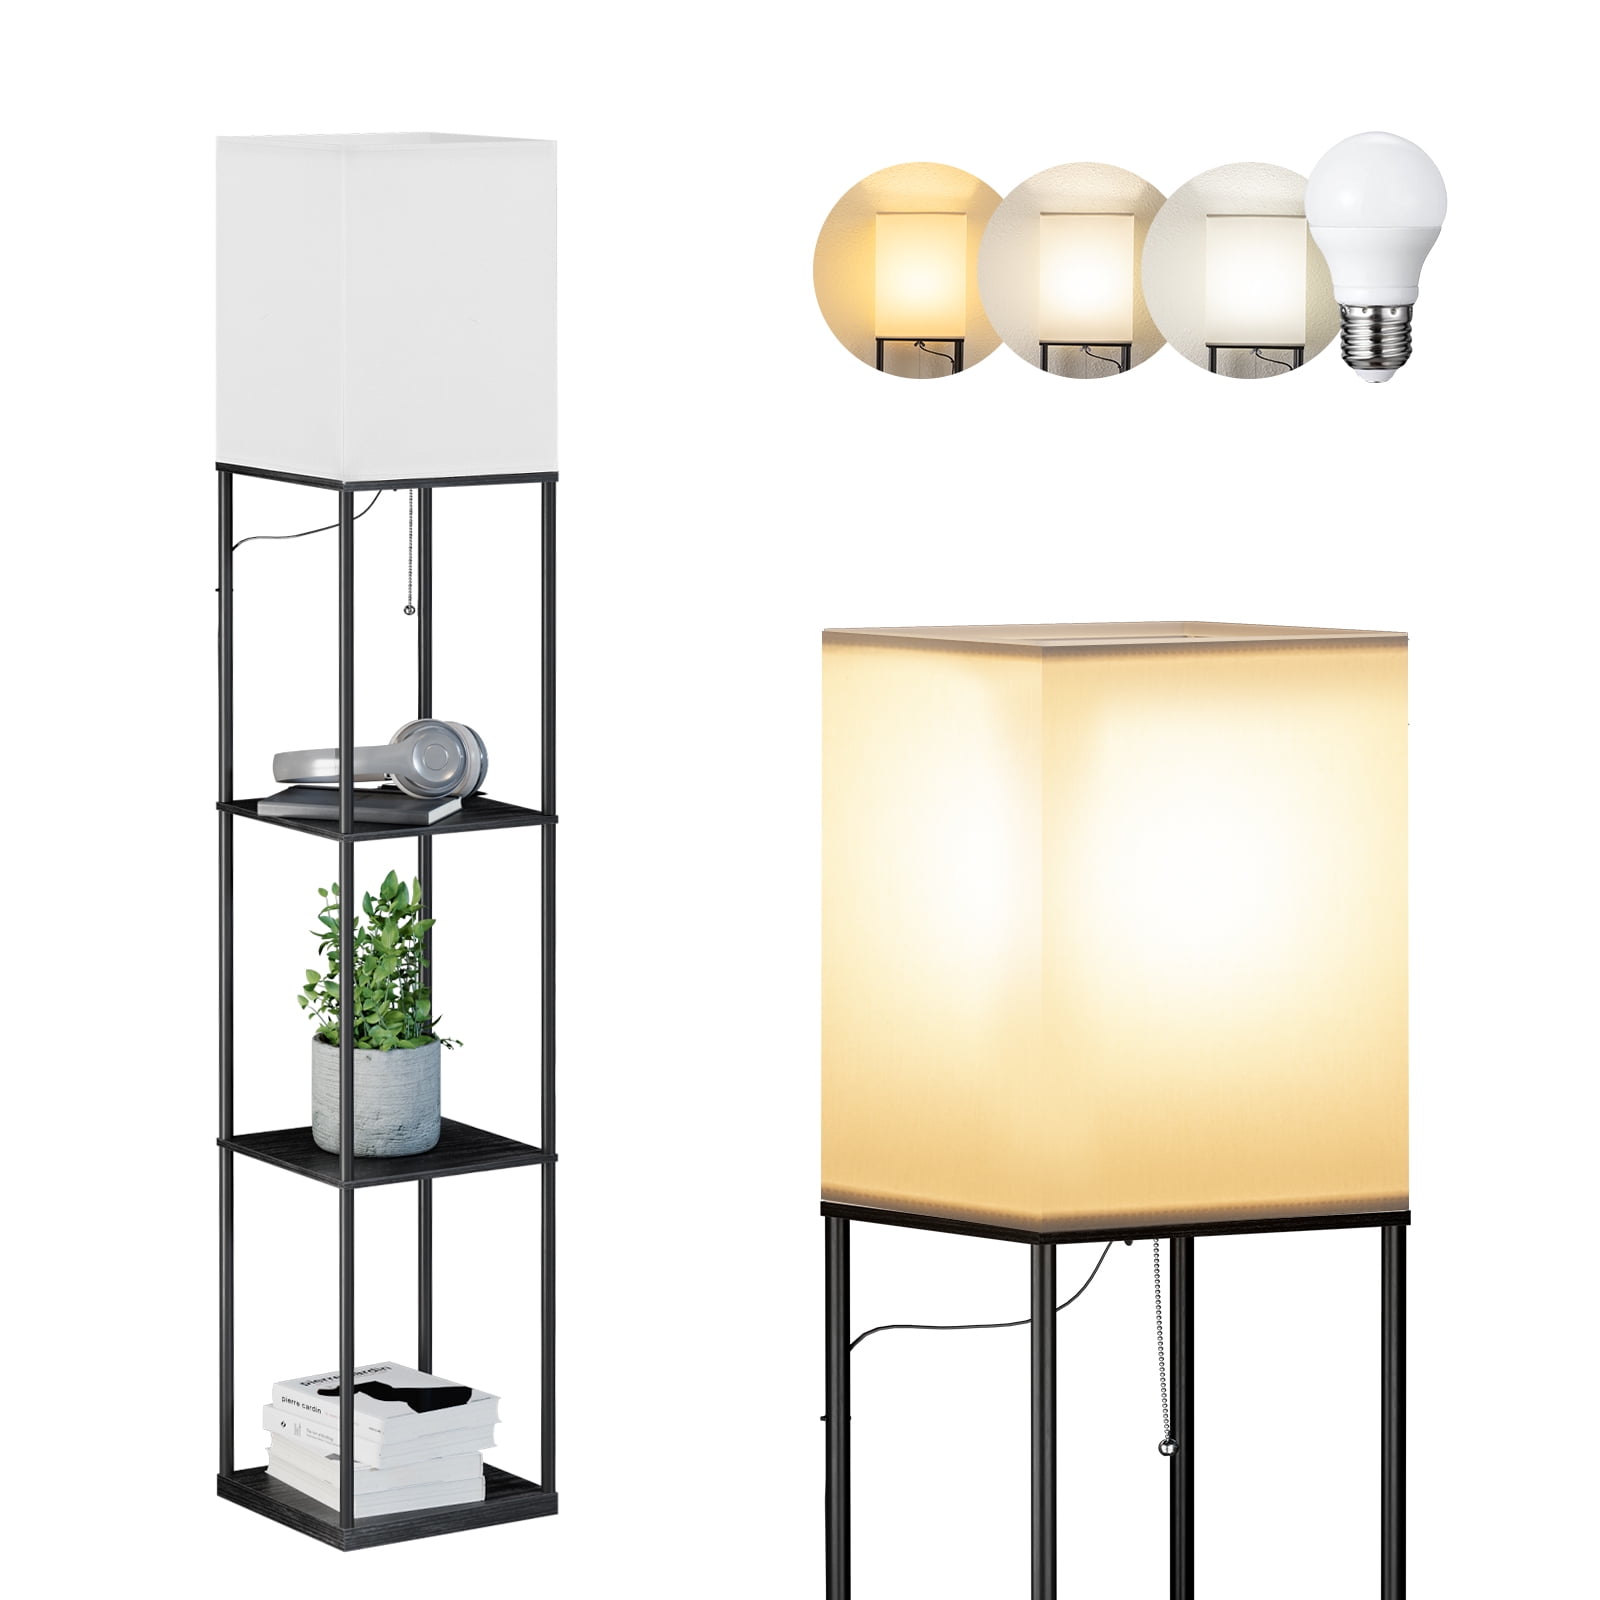 SUNMORY Shelf Floor Lamp with 3-Way Dimmable LED Bulb, Modern Iron